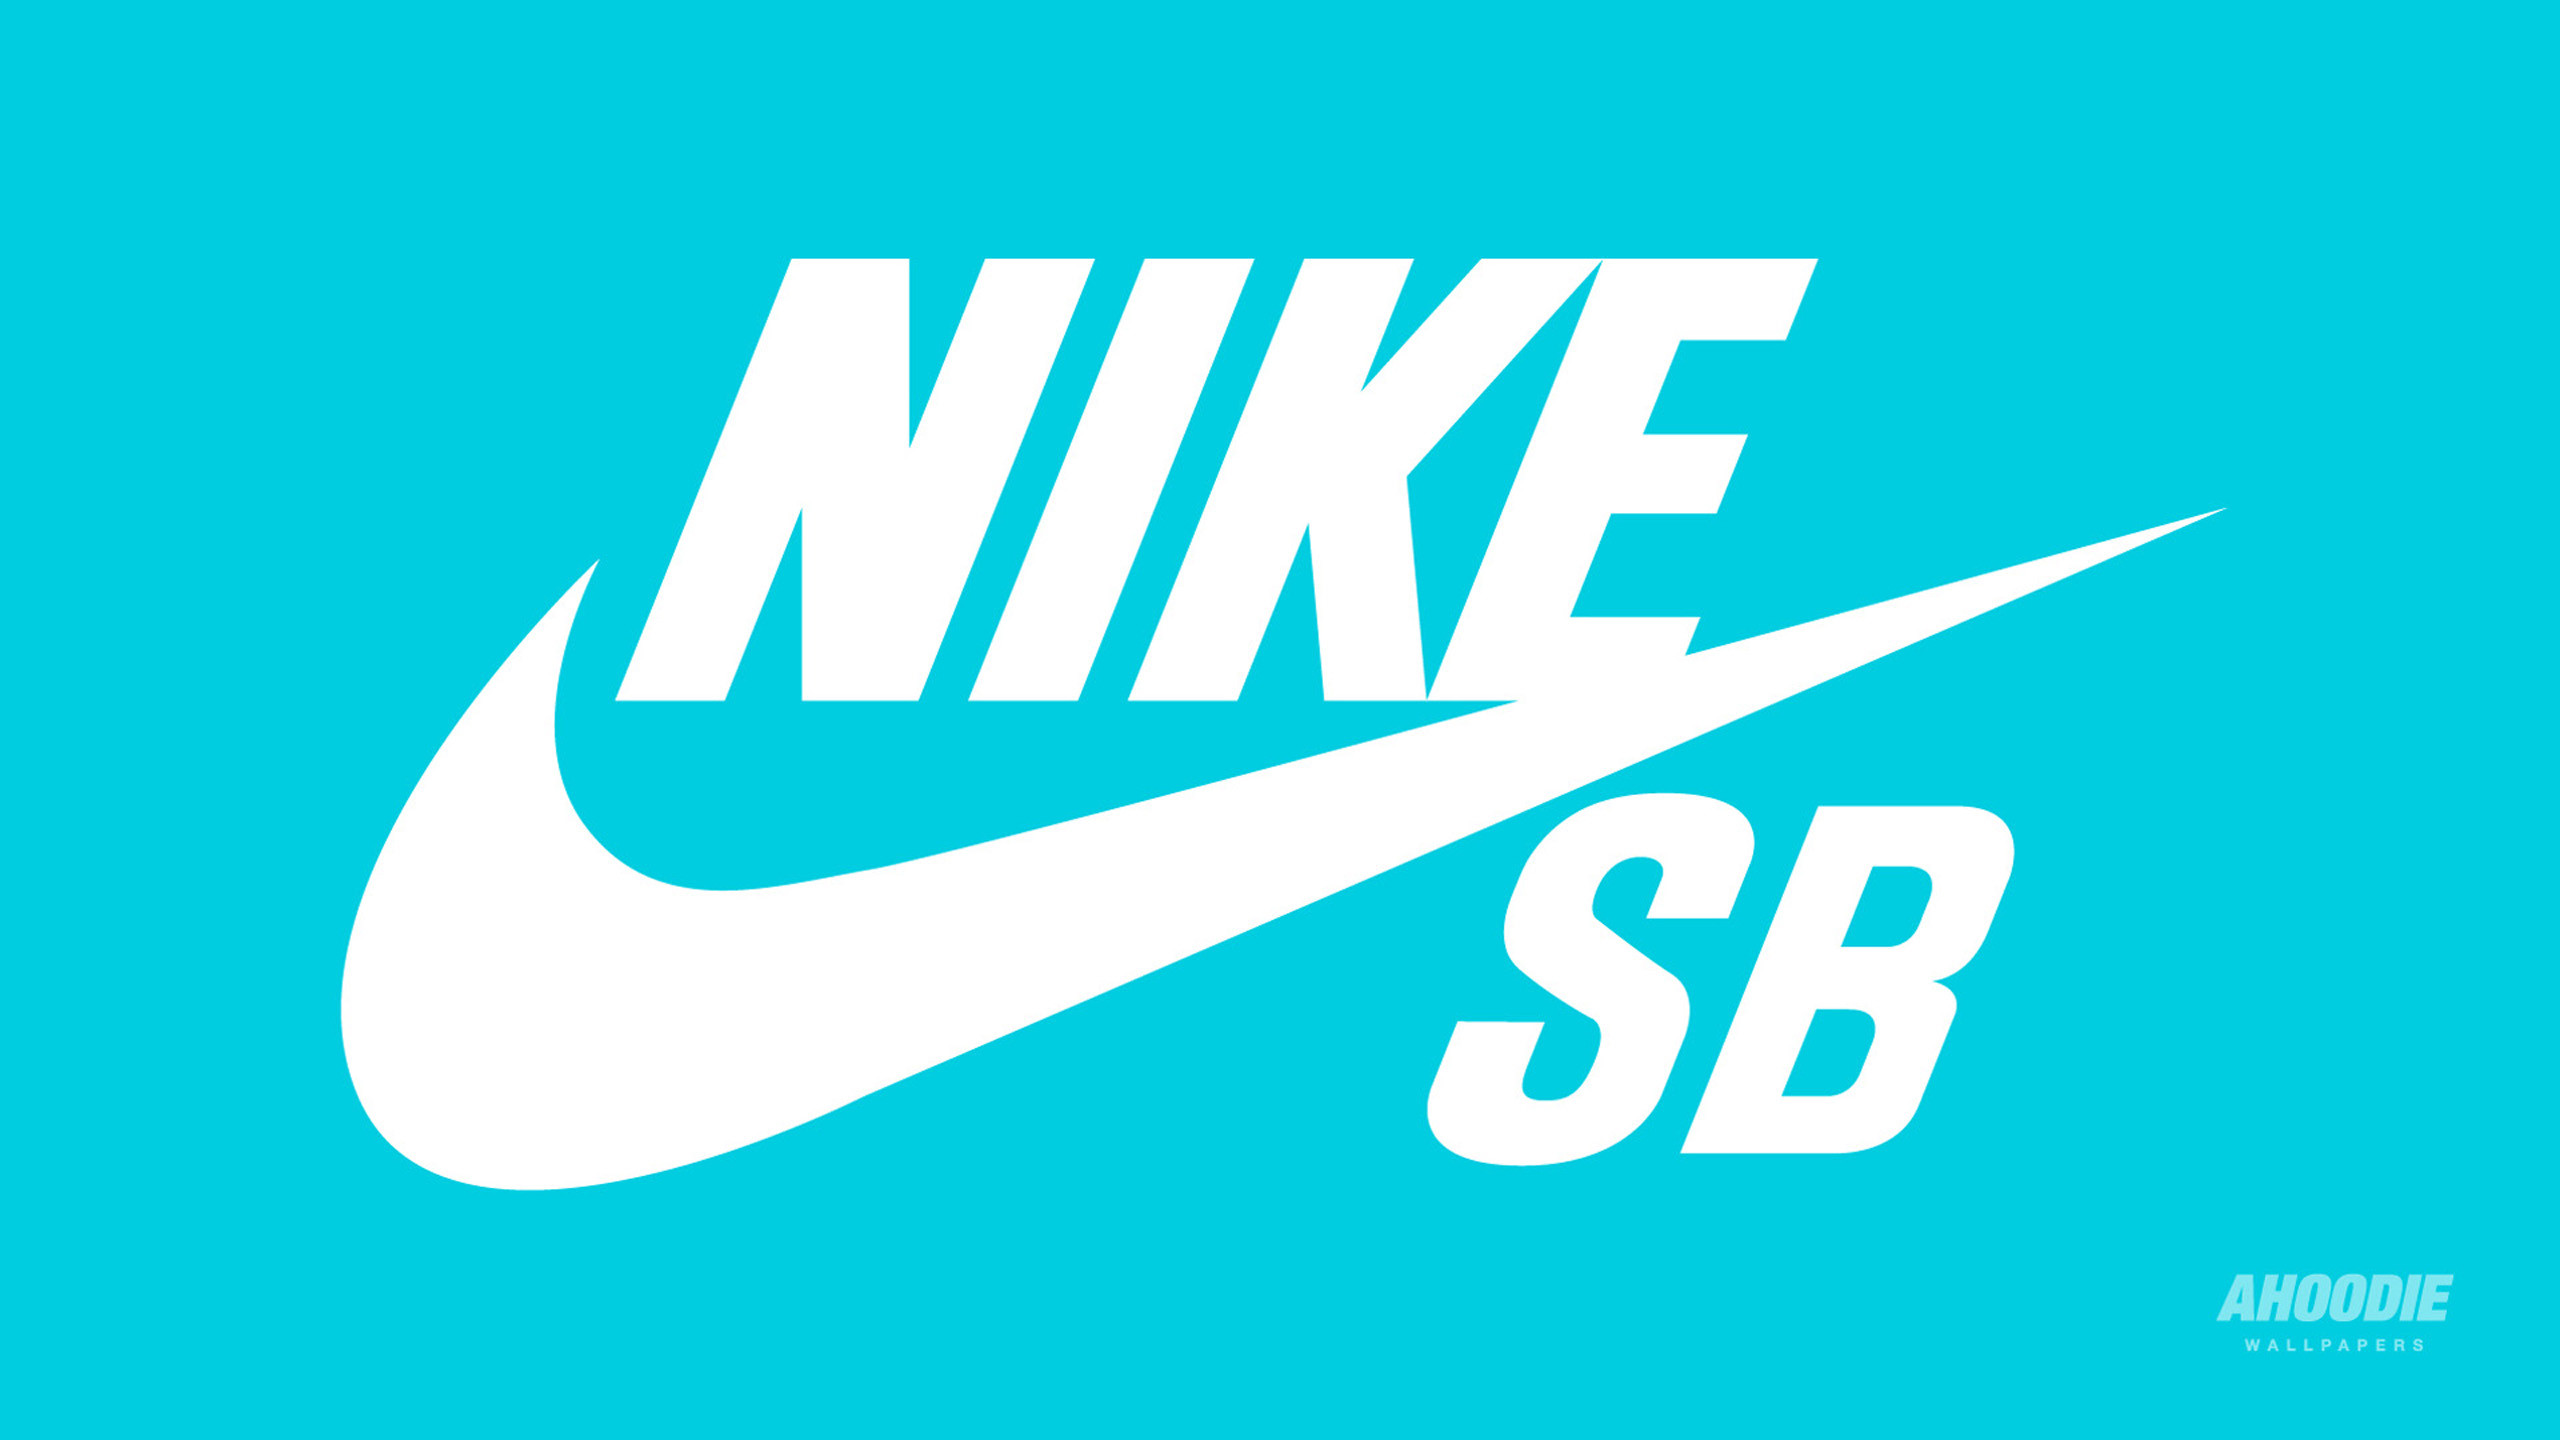 2560x1440 Cute Nike SB Wallpapers in High Quality, Xene Francesch.  0.234  MB. Nike SB